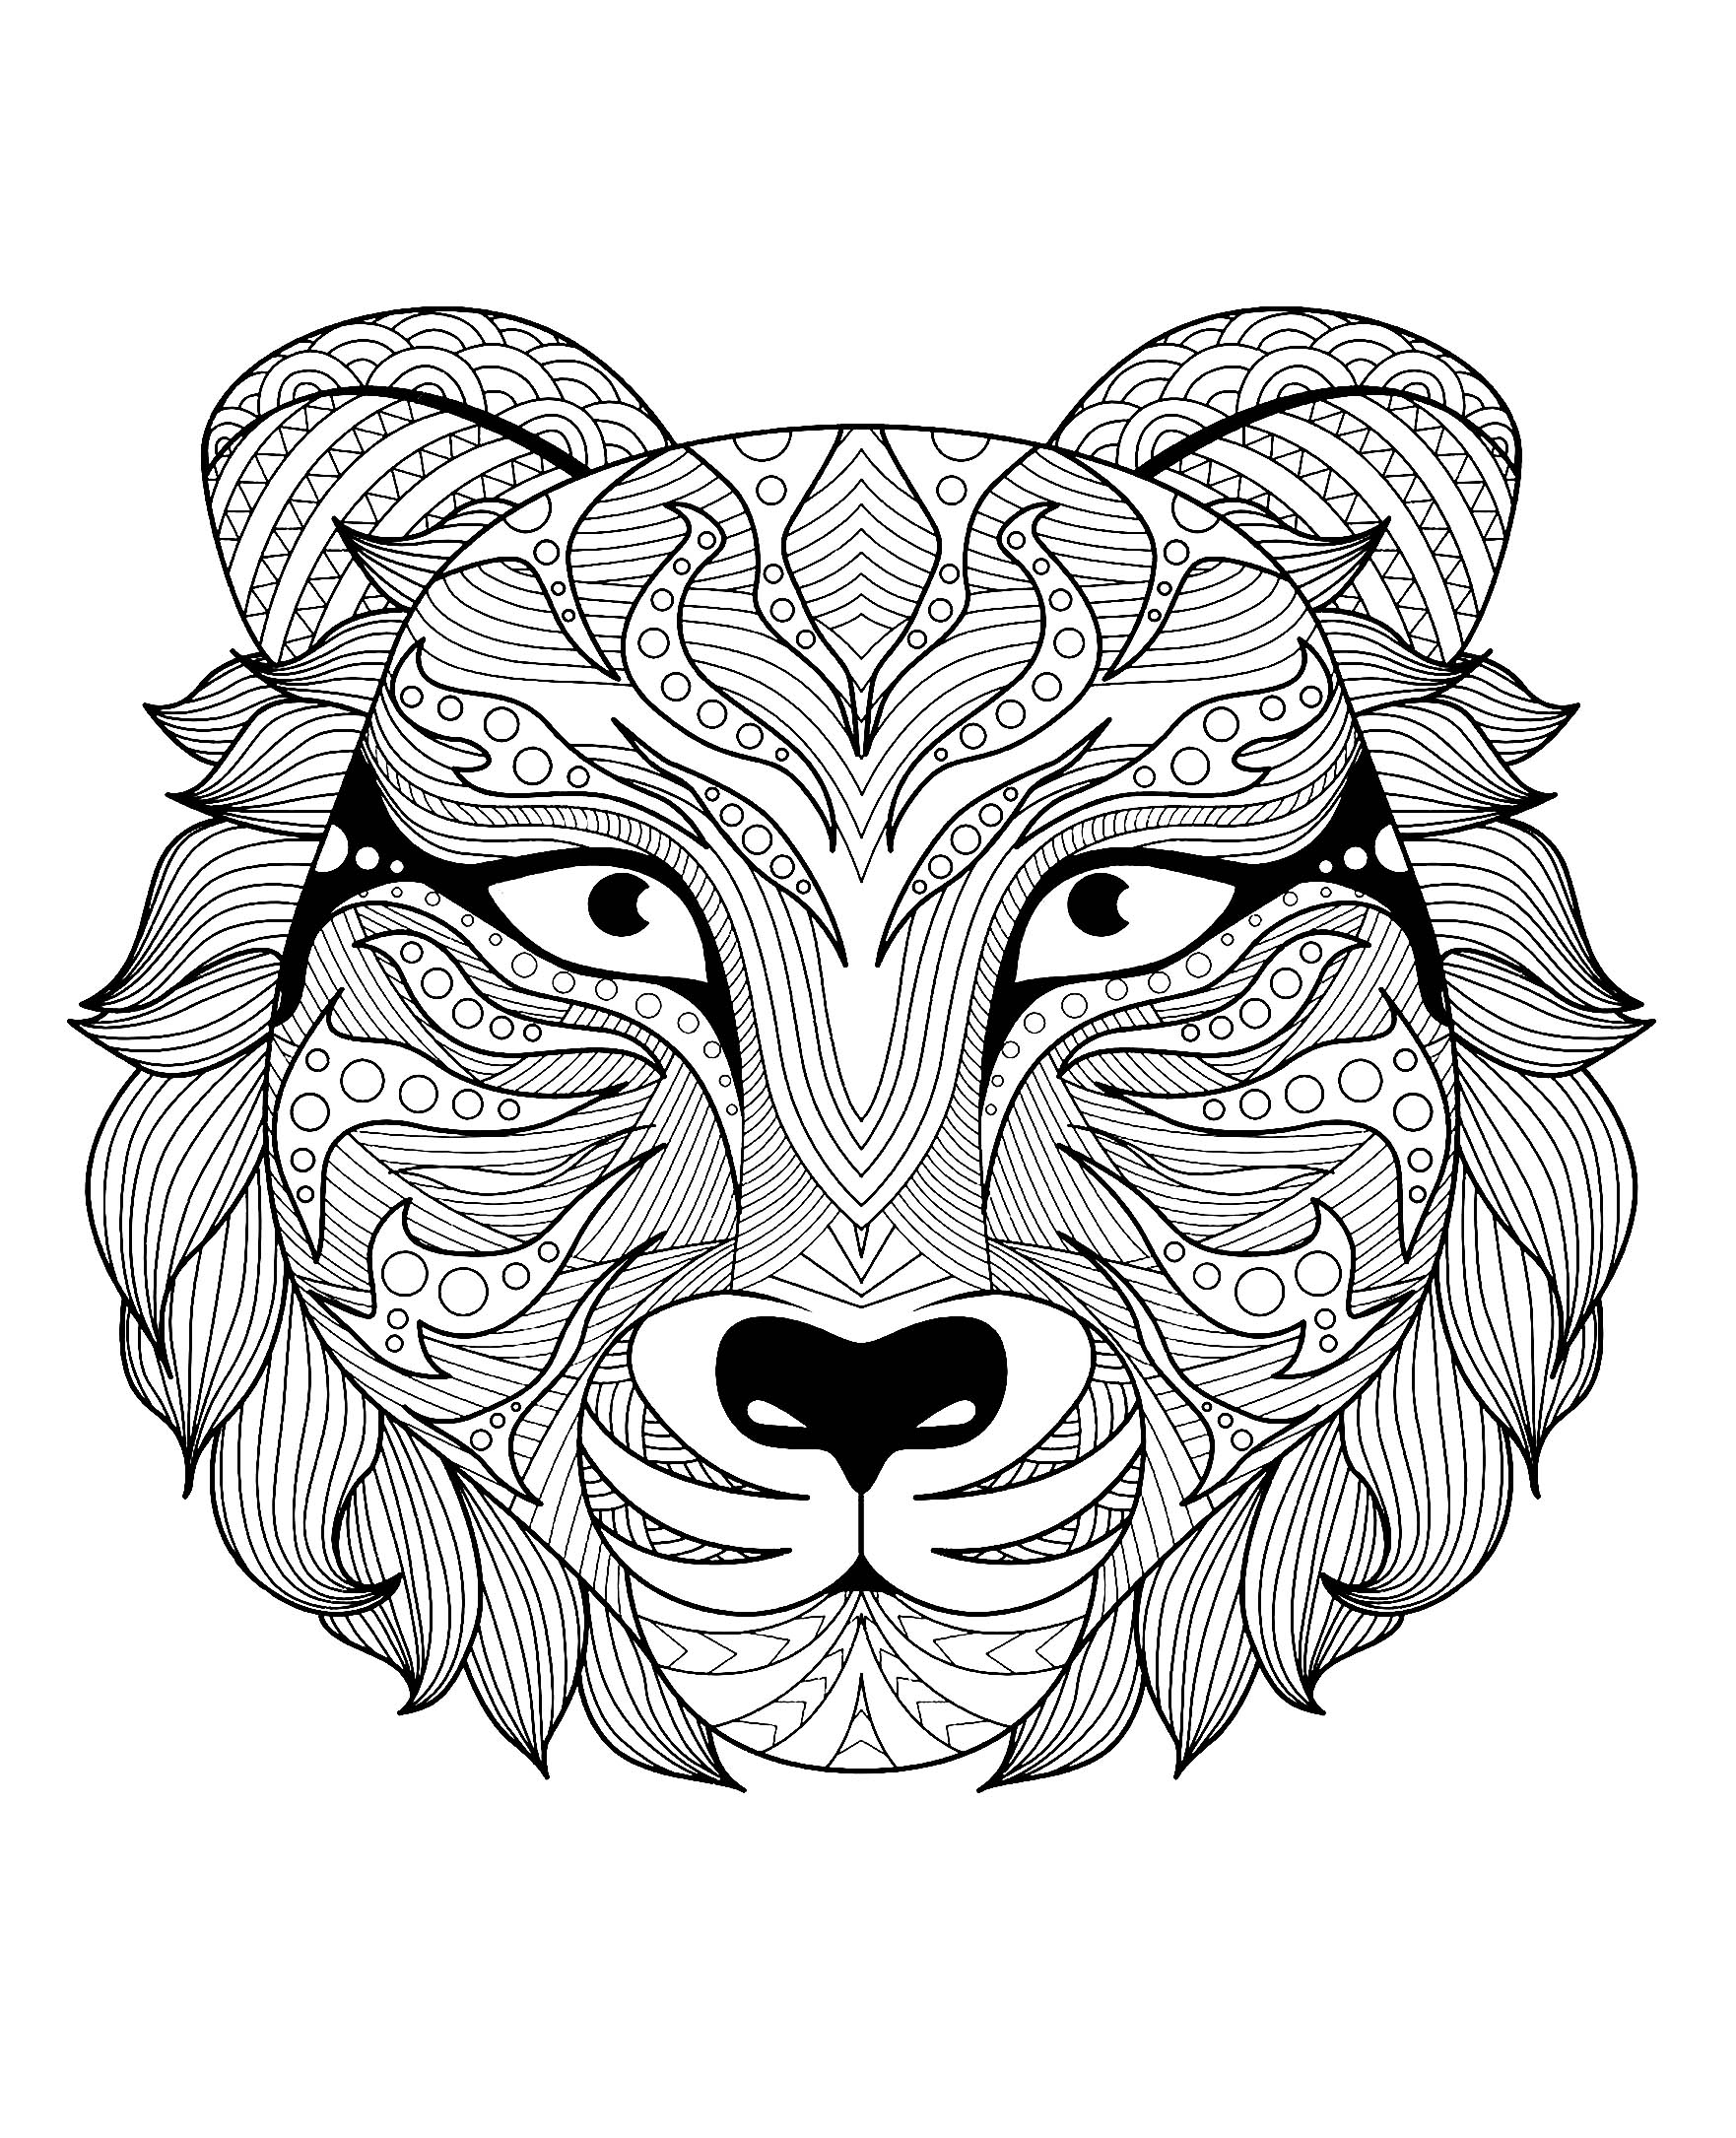 Superbe tête de tigre, Artiste : Bimdeedee   Source : 123rf